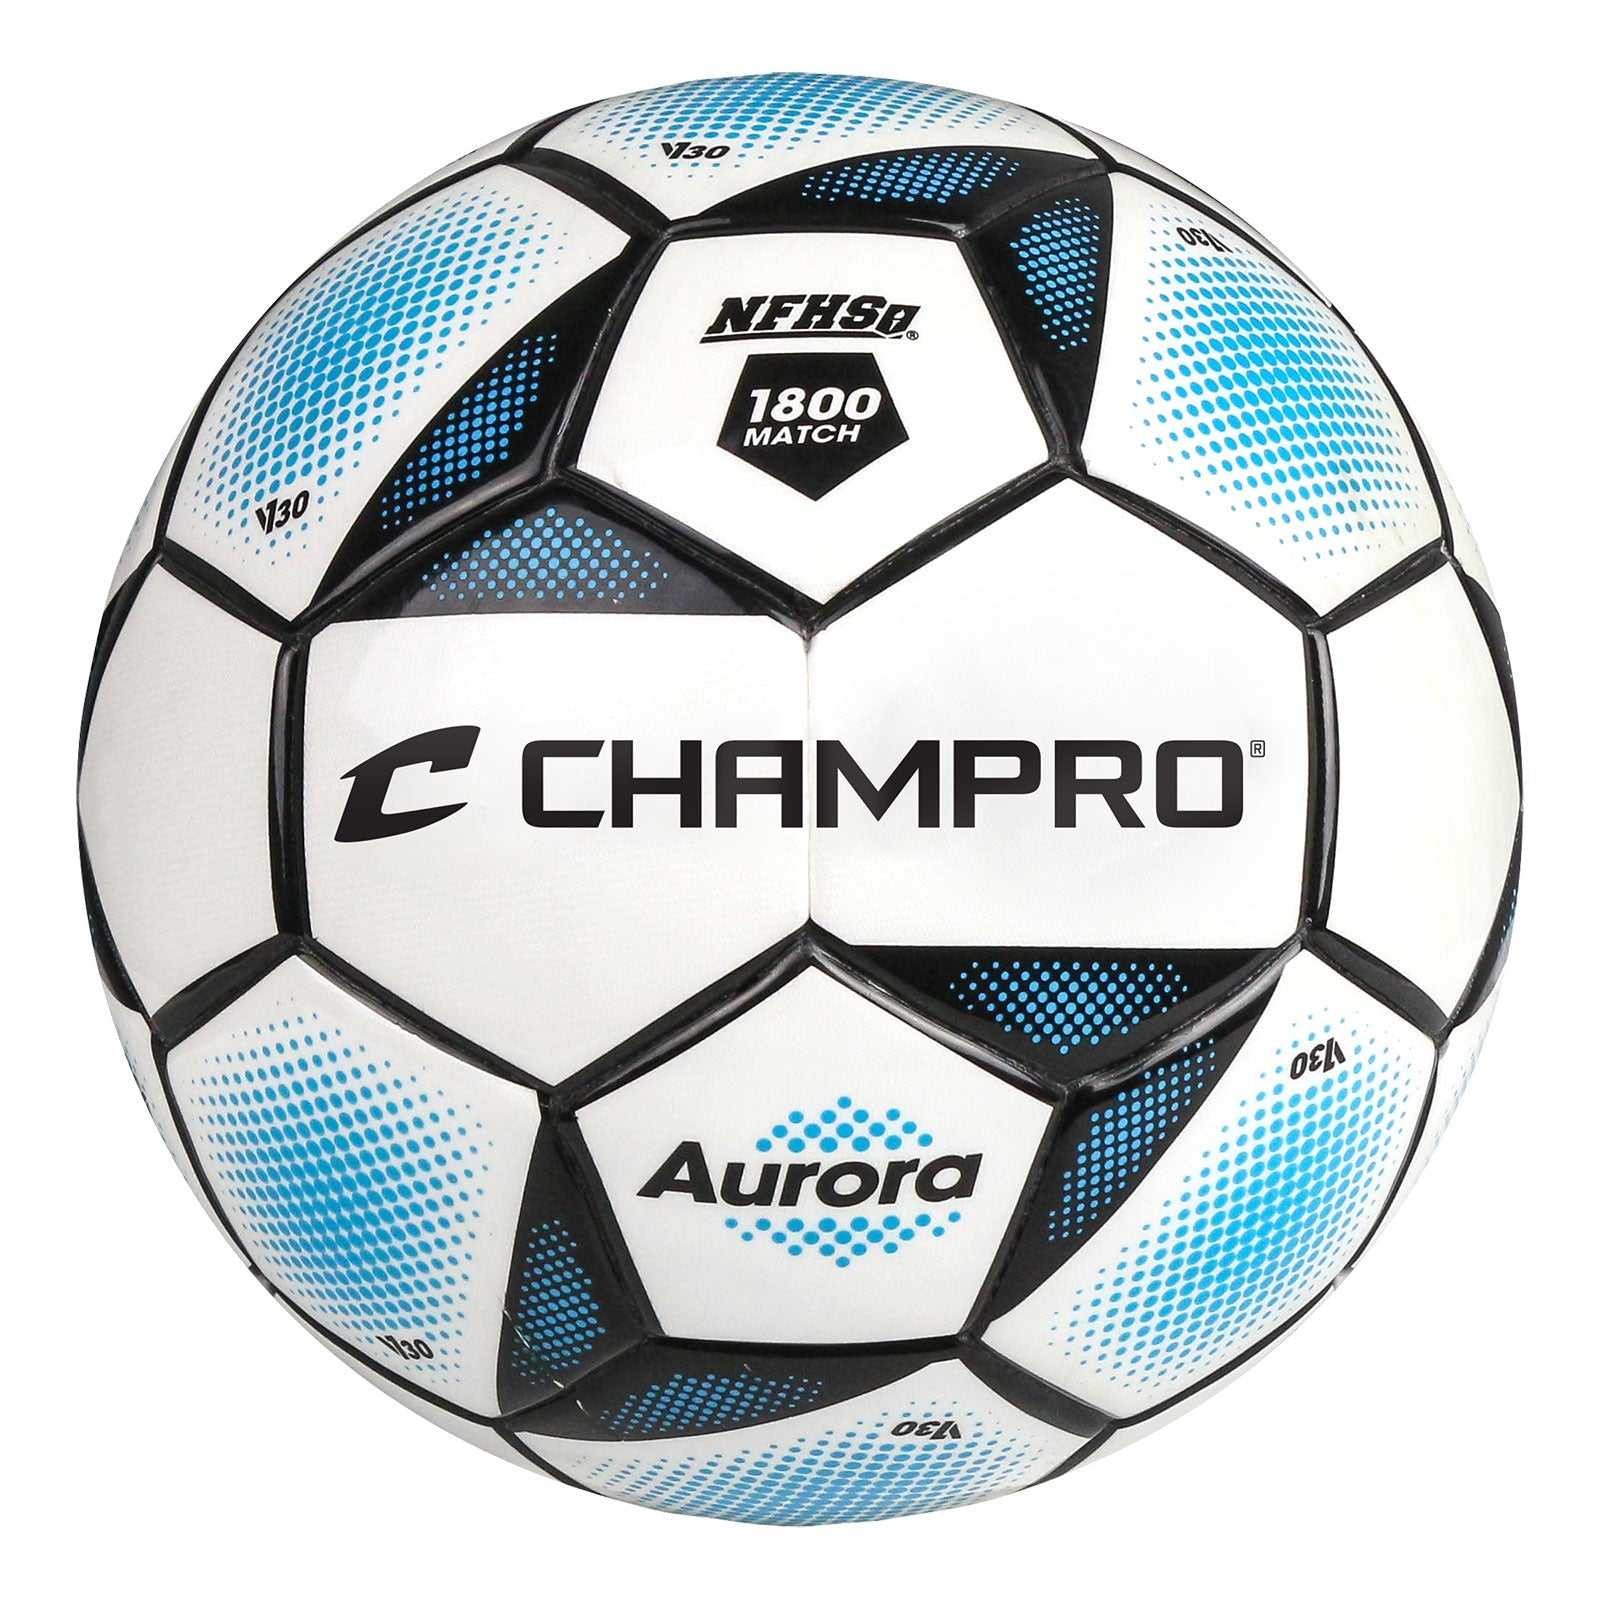 Champro SB1800 Aurora Thermal Bonded Soccer Ball "1800" - Black Optic Blue - HIT a Double